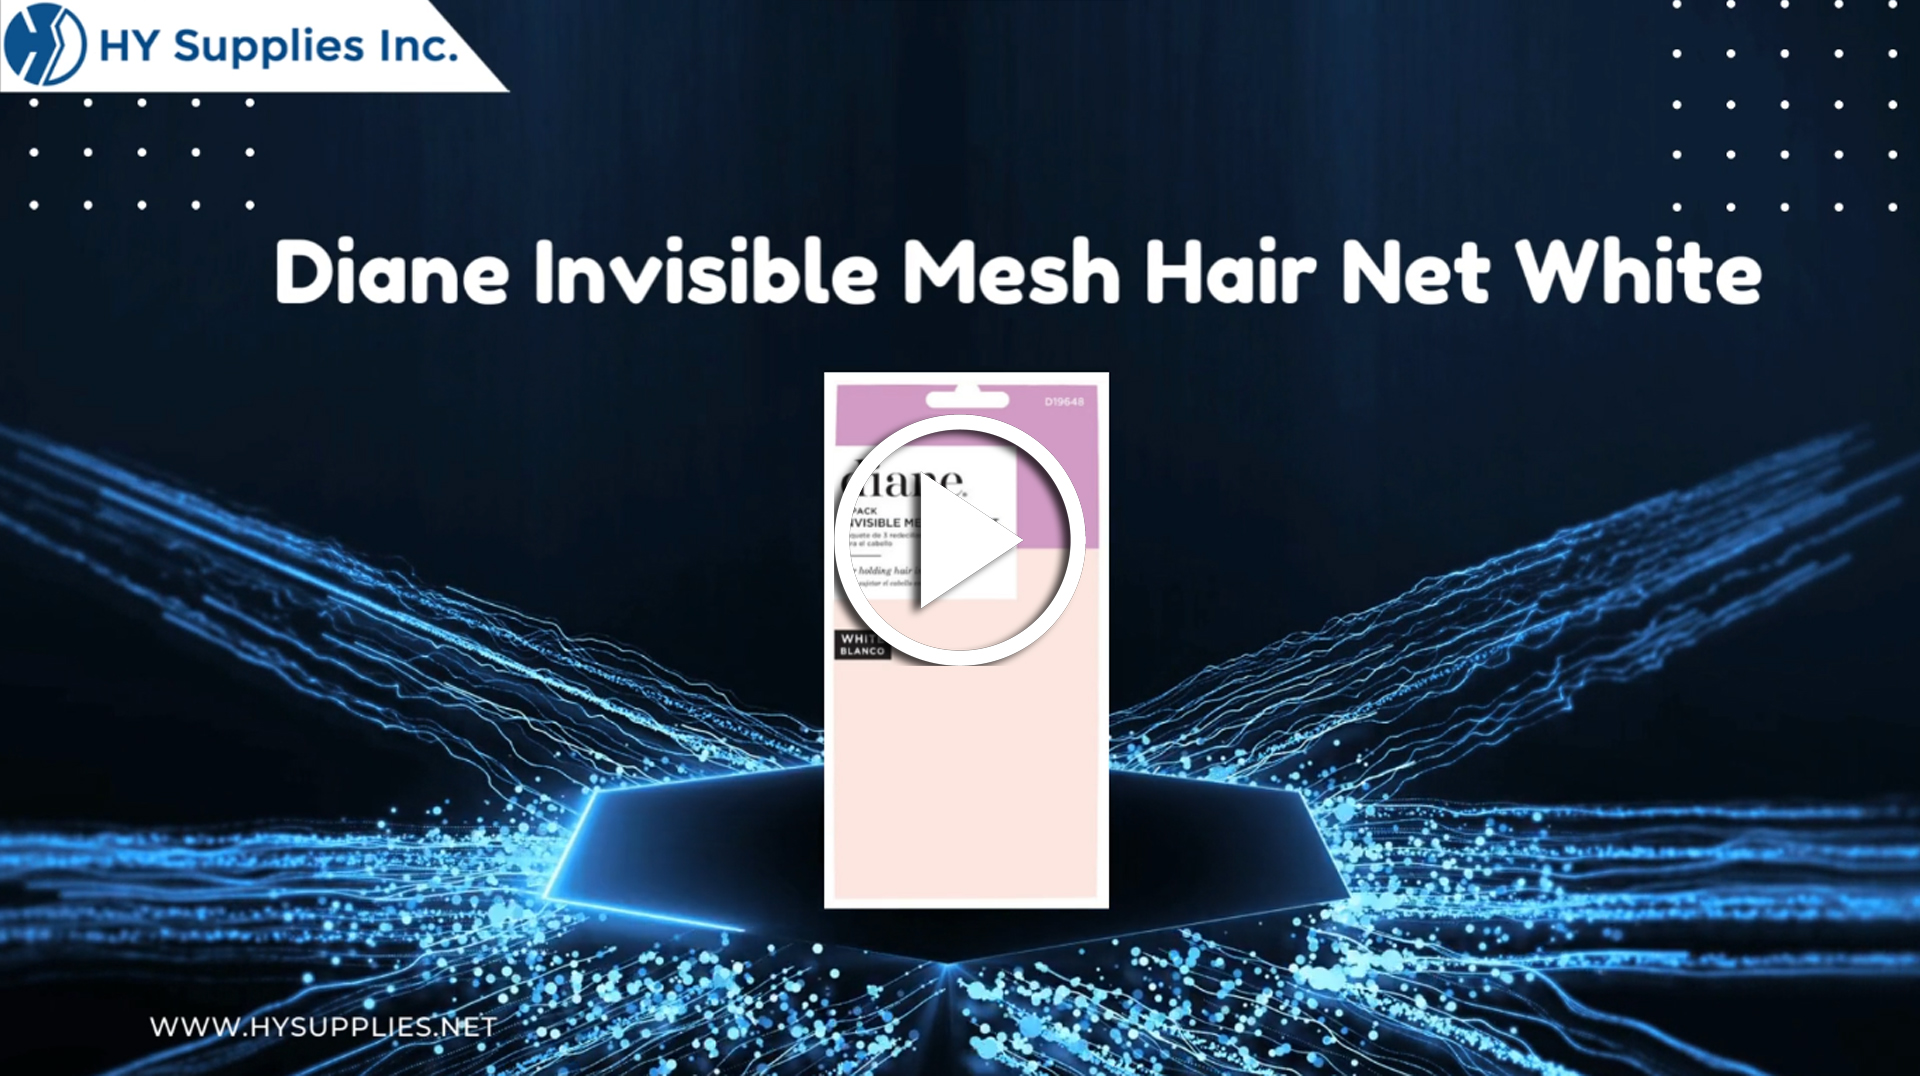 Diane Invisible Mesh Hair Net White